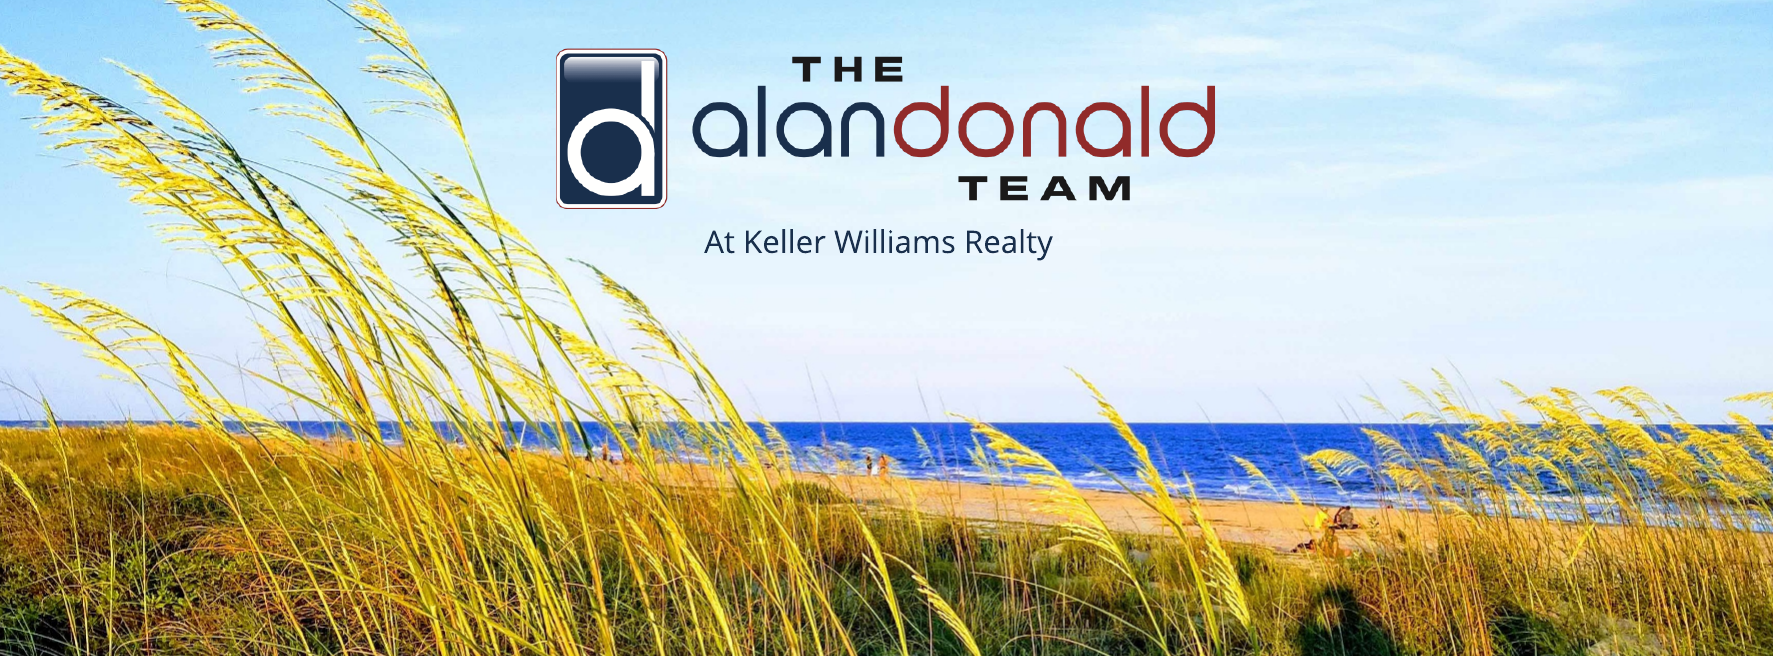 Alan Donald Team at Keller Williams